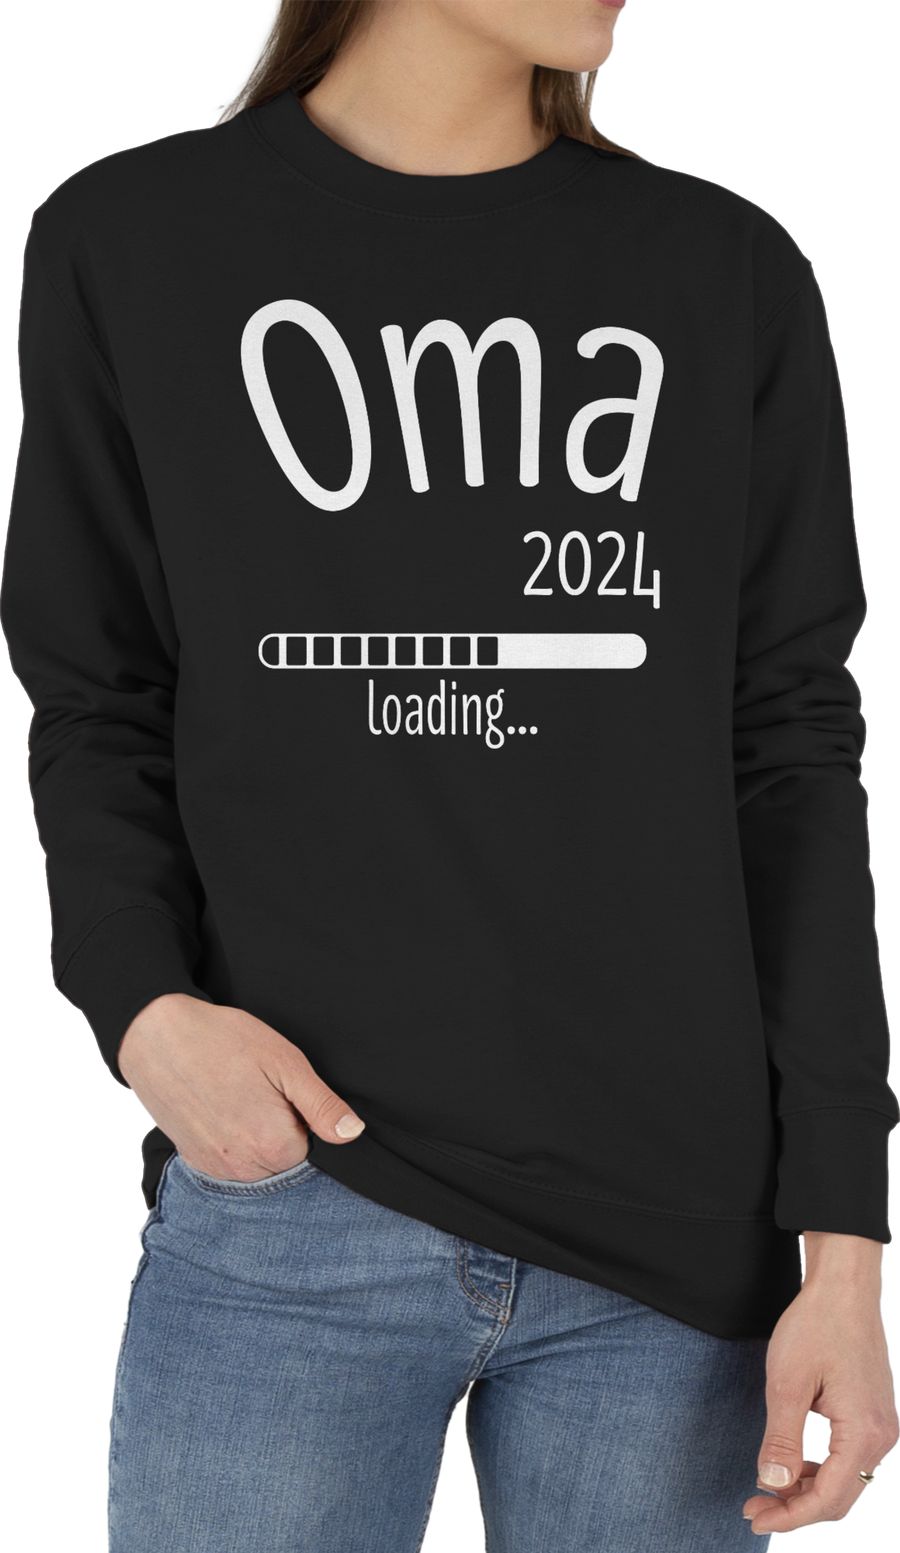 Oma 2024 loading